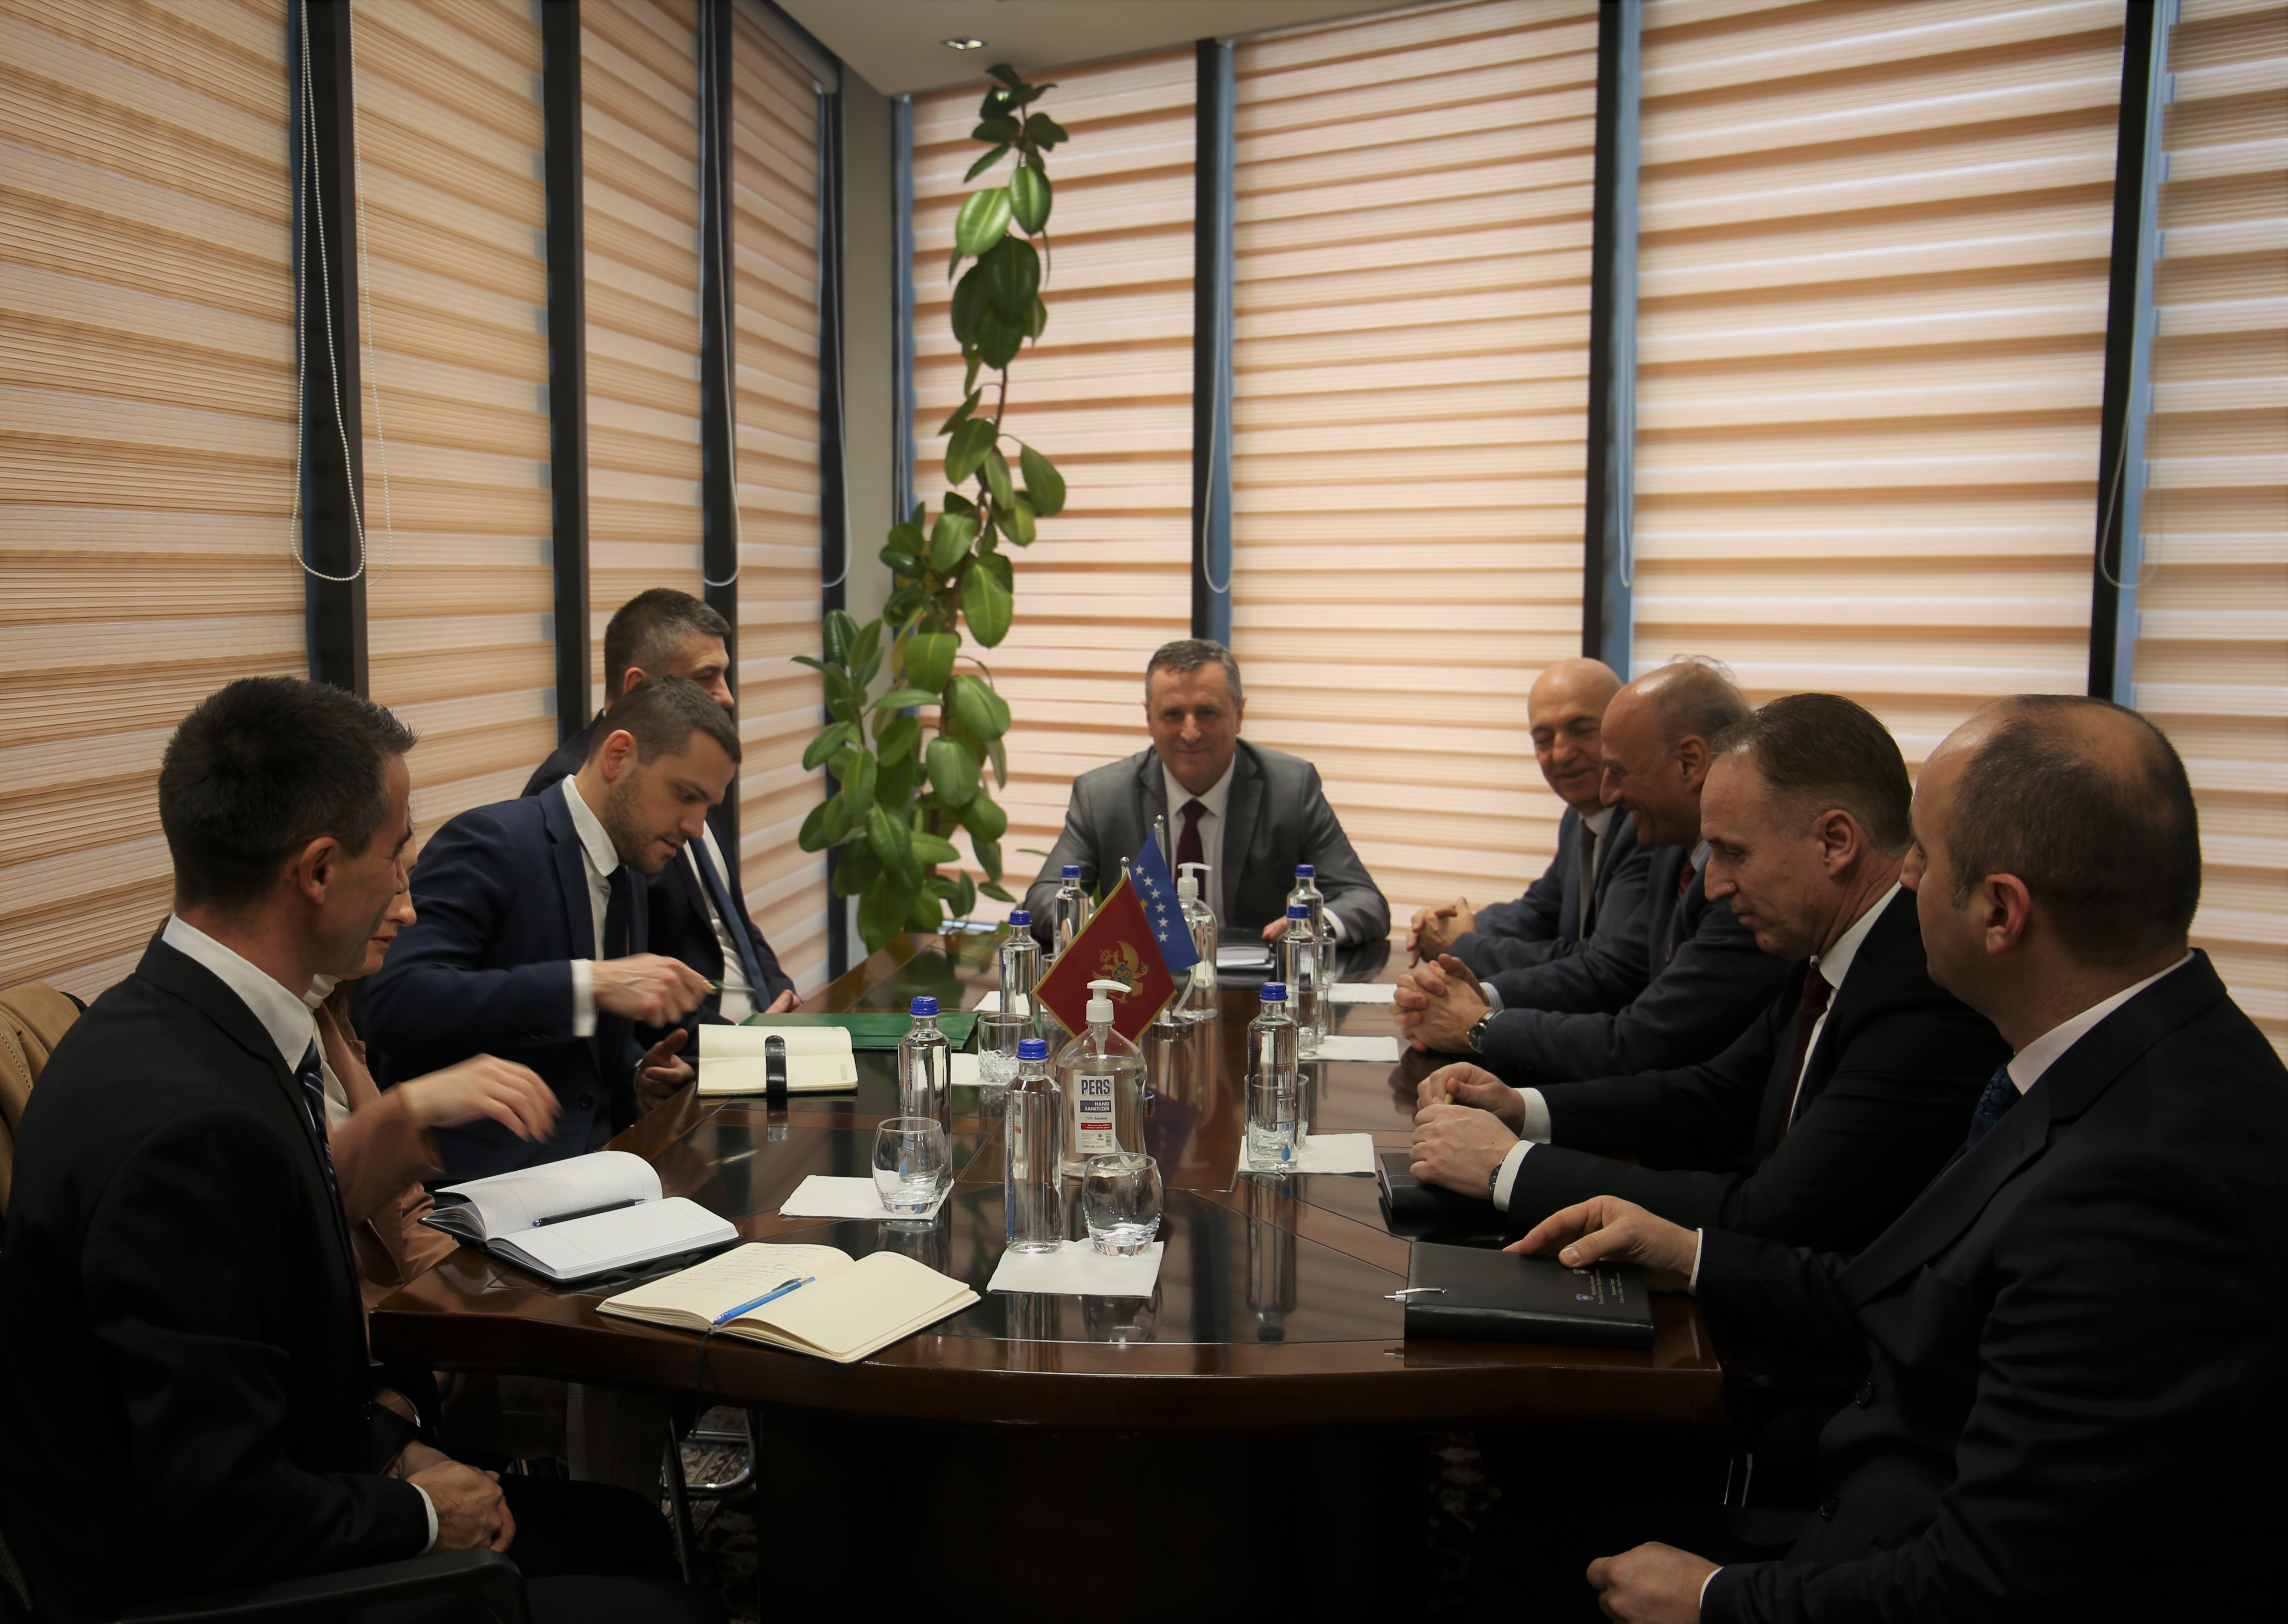 Kryeprokurori Blerim Isufaj pret në takim Kryeprokurorin Vlademir Novoviç